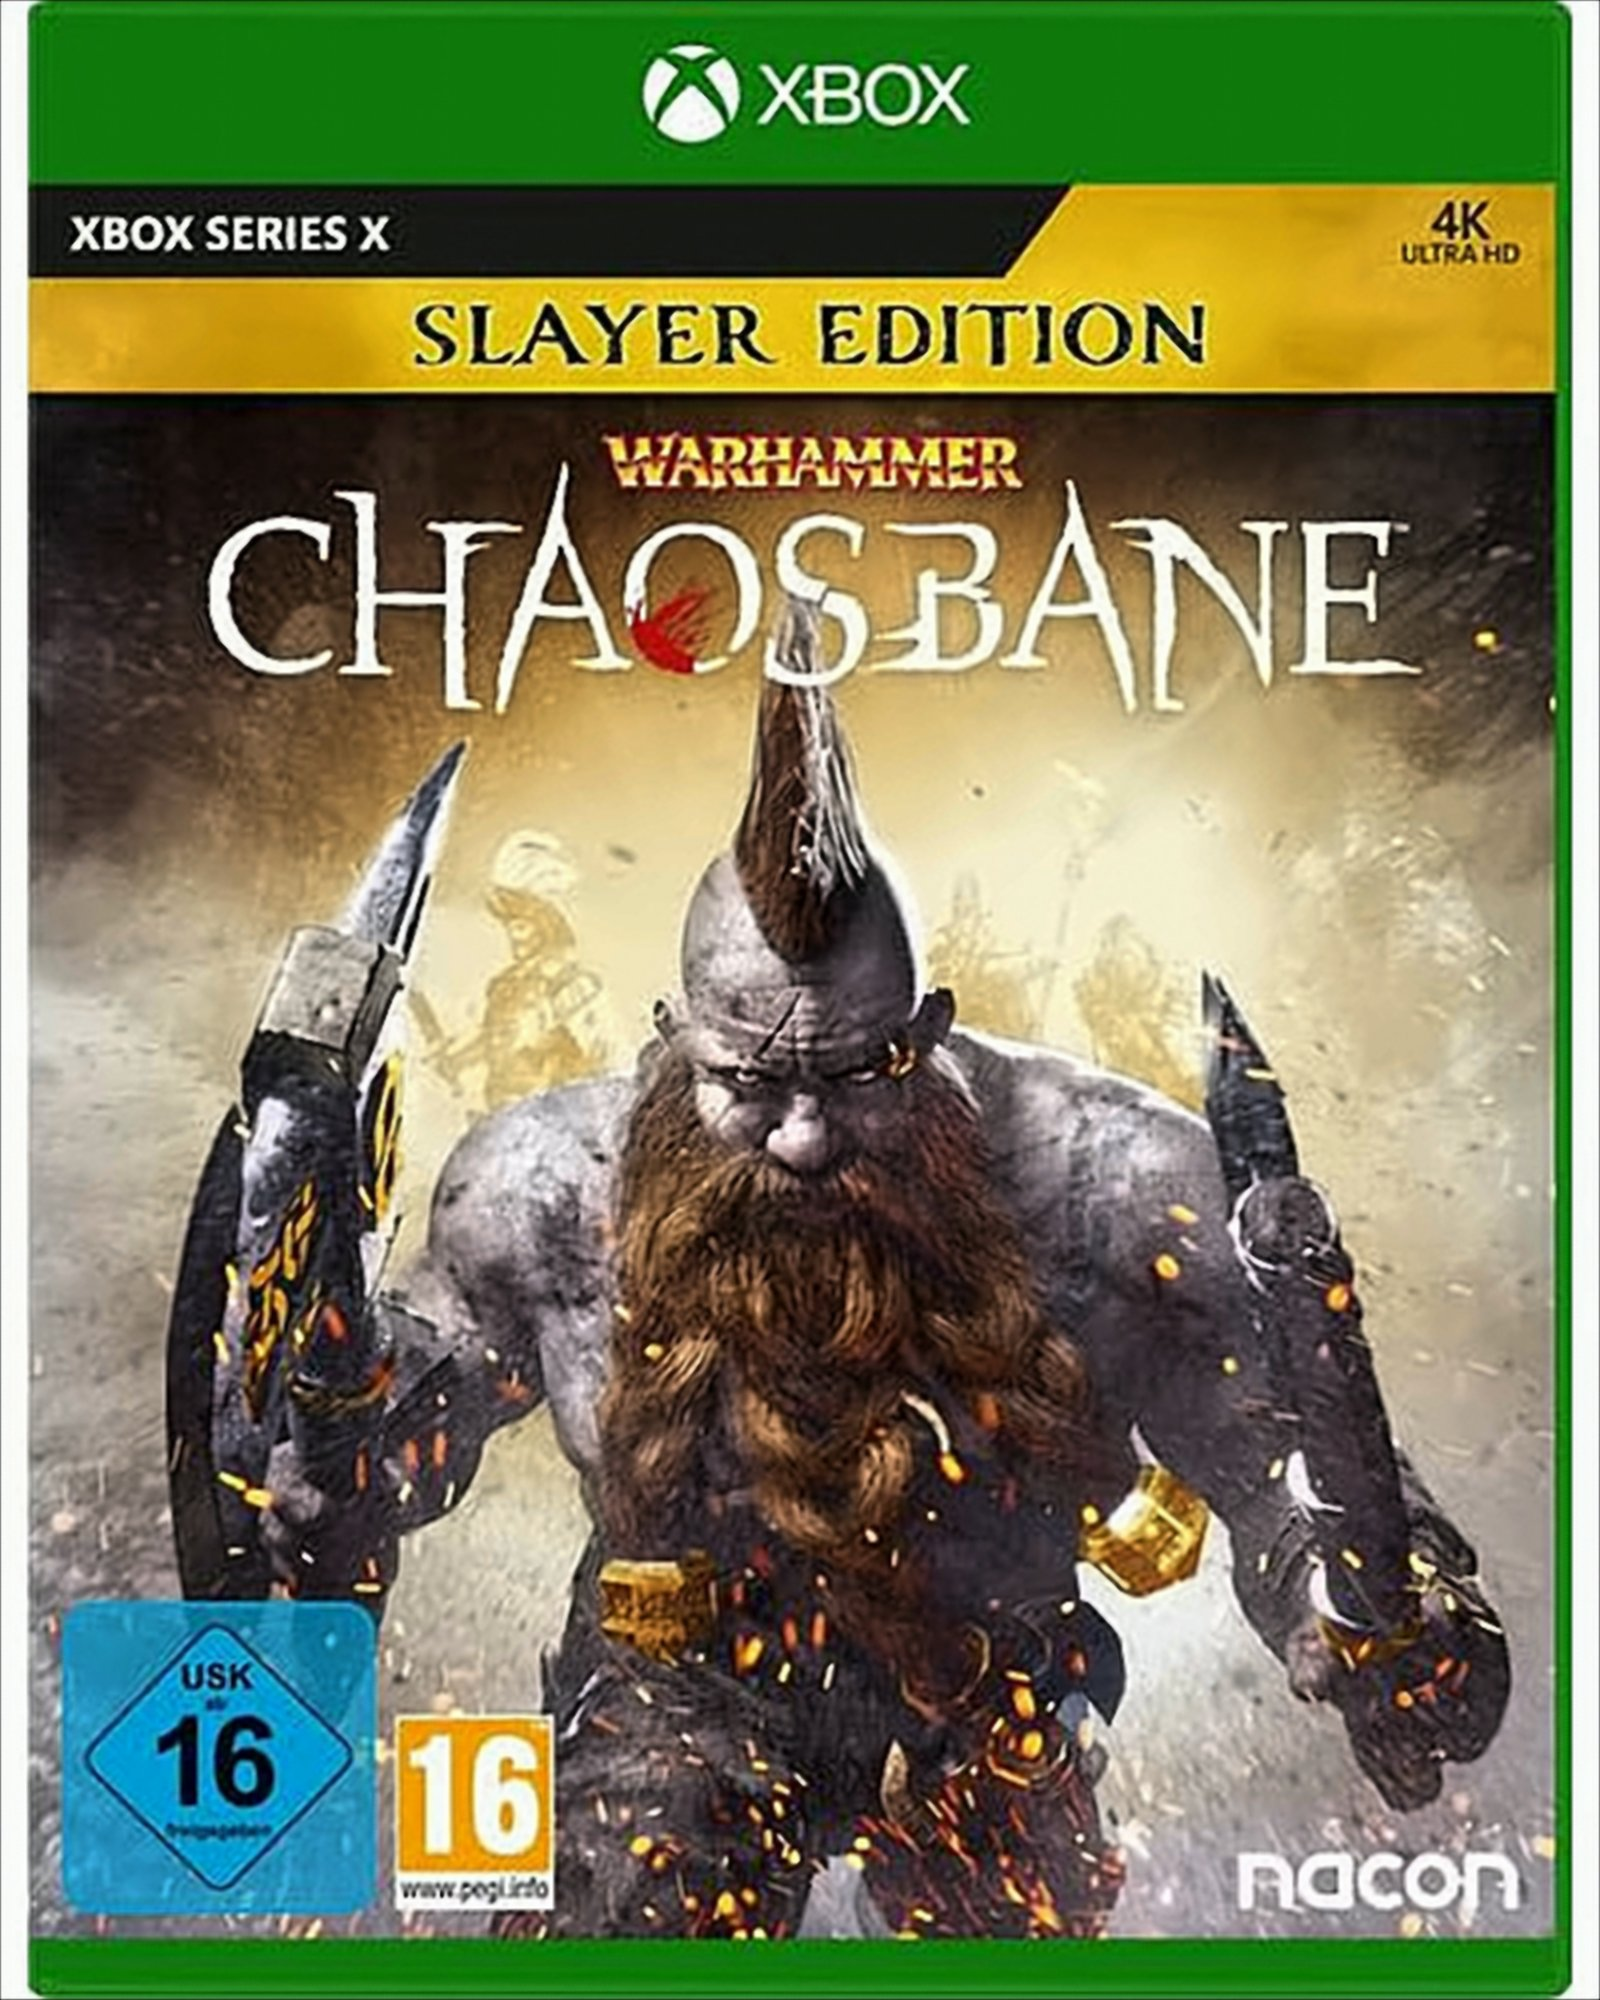 Warhammer Chaosbane XBSX Edition [Xbox X|S] - Slayer Series